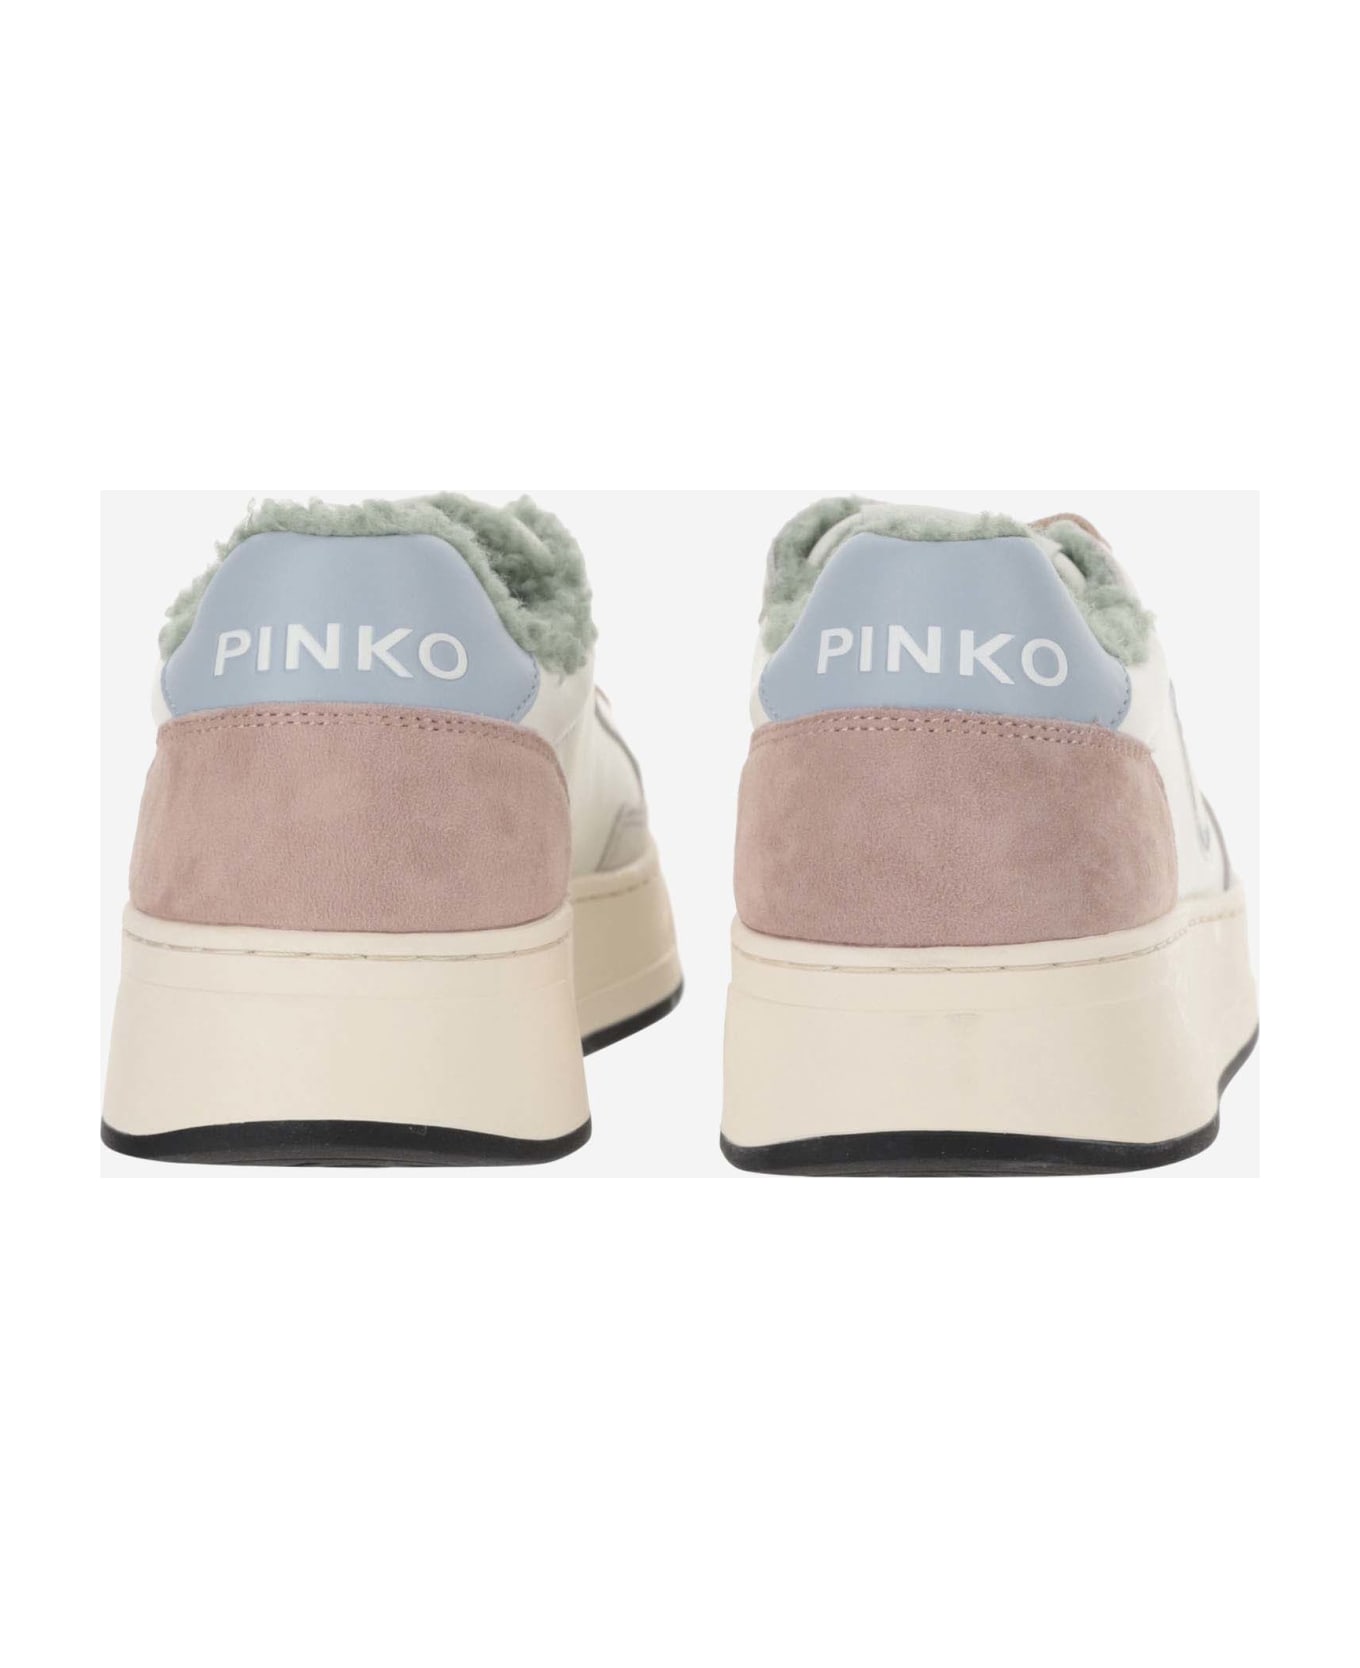 Pinko Bondy 2.0 Suede Sneakers - J Off White Beige Menta スニーカー